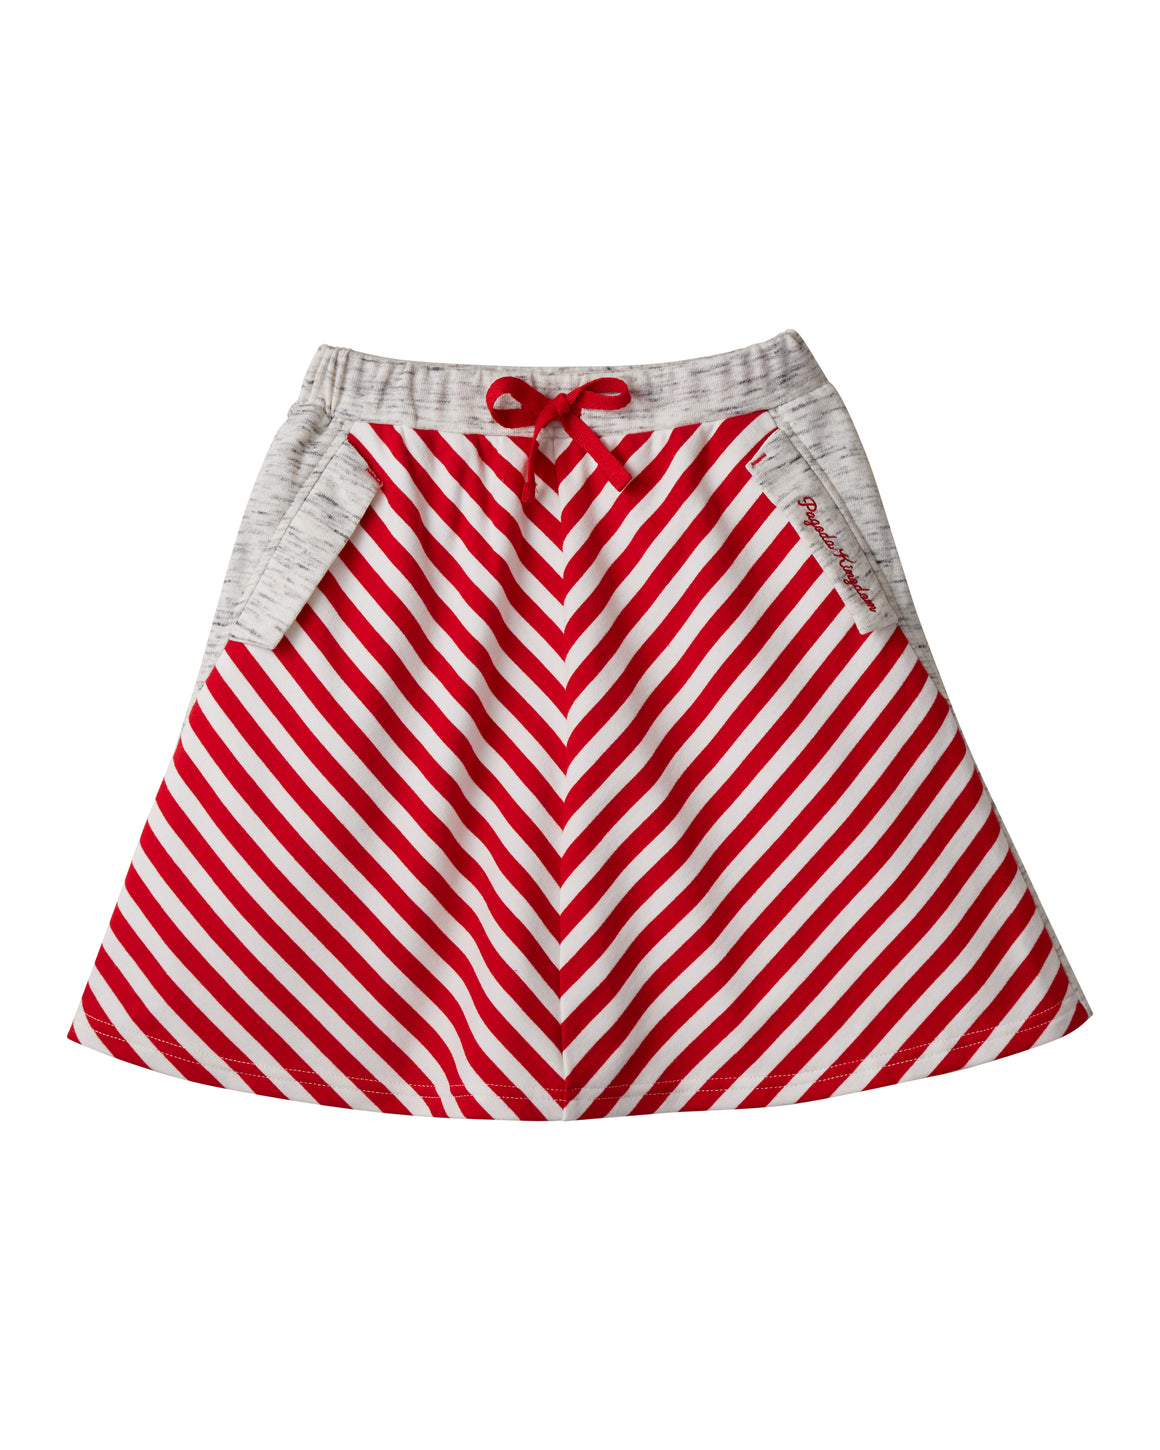 Stripey Retro Skirt